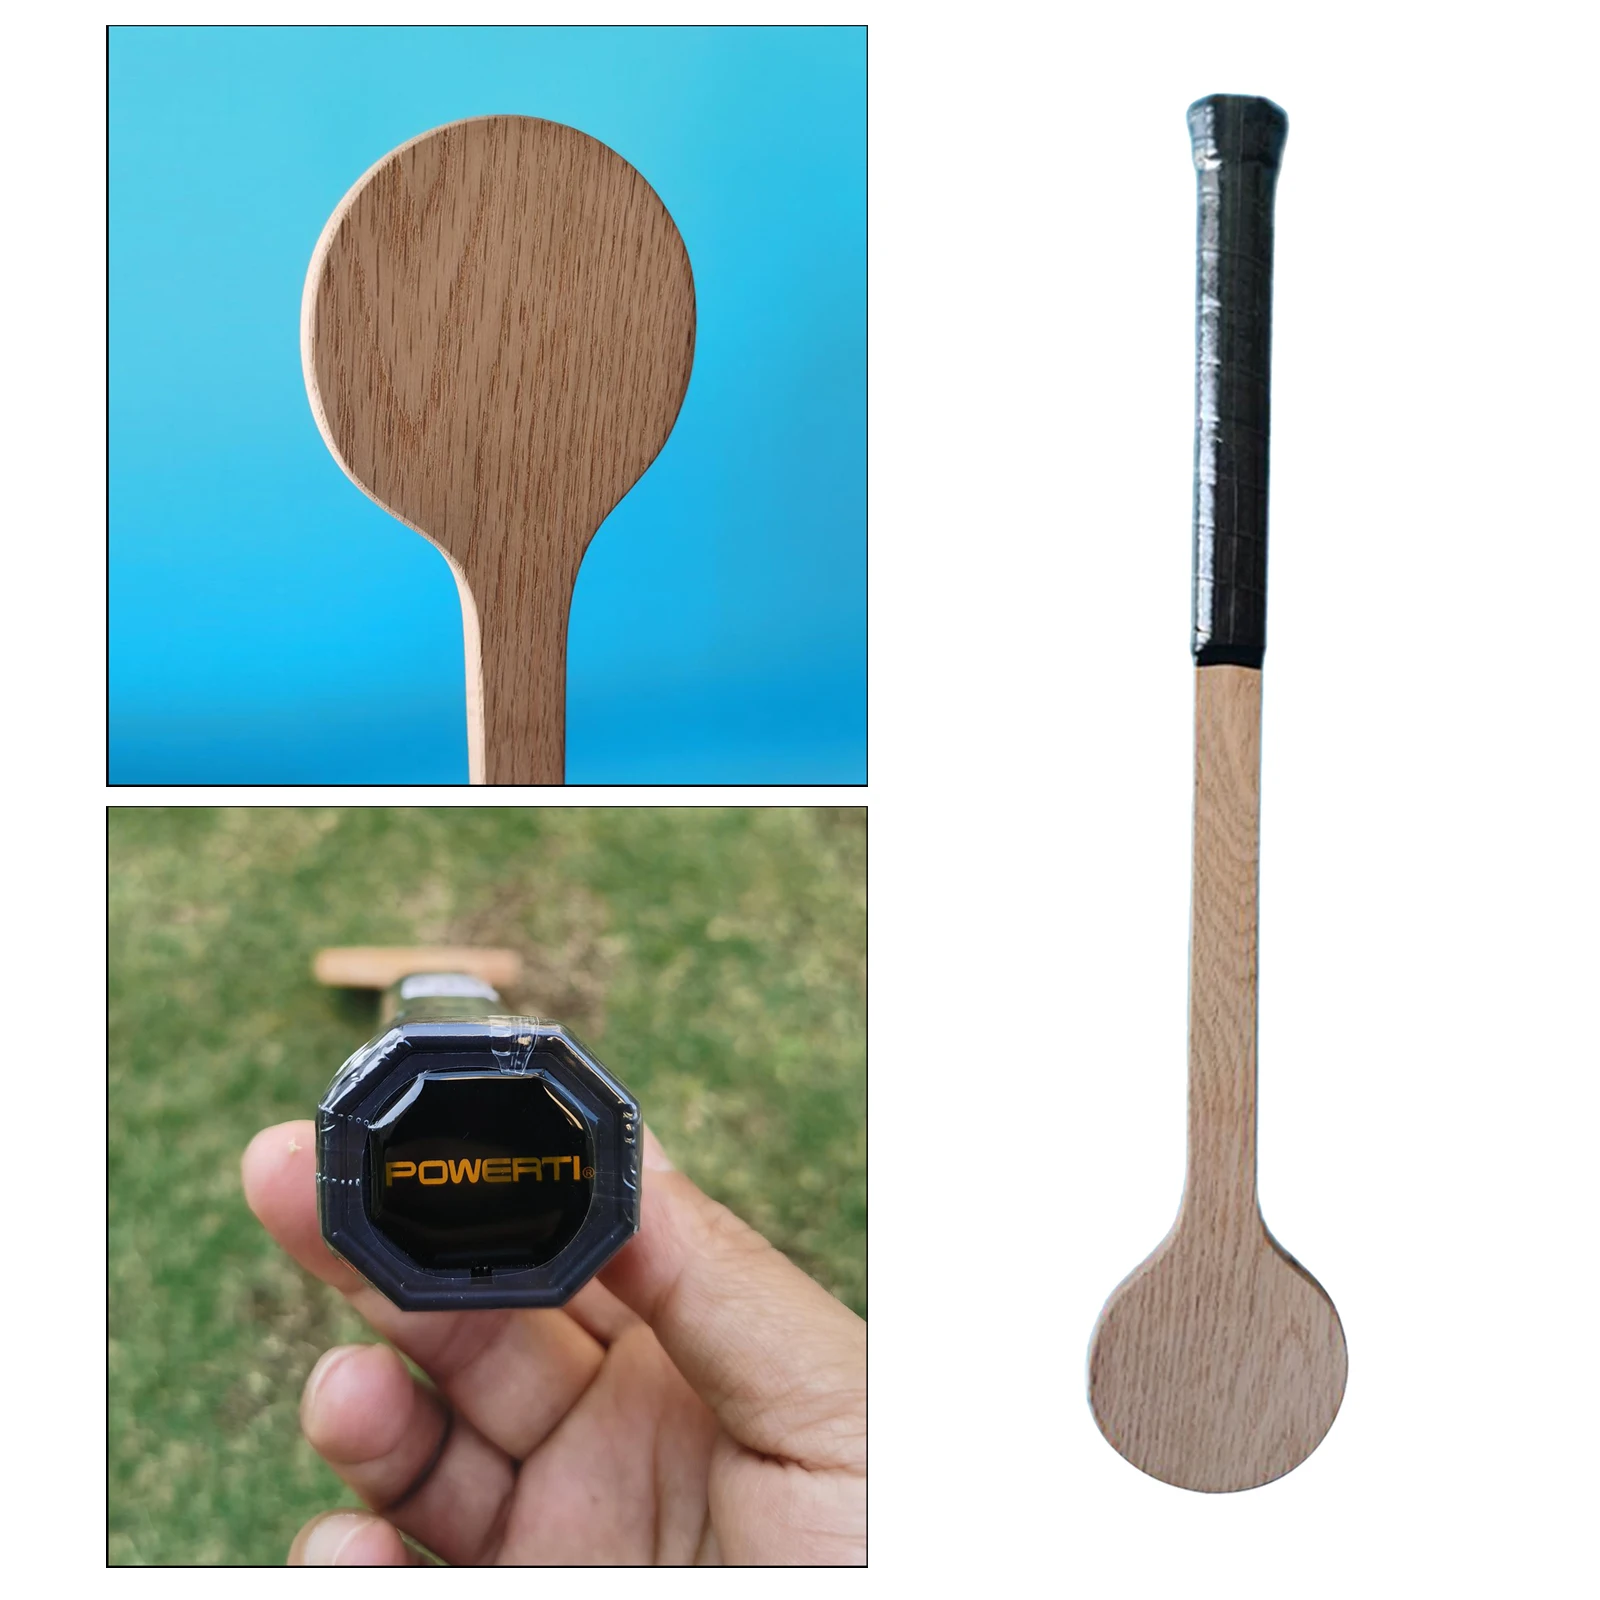 Wood Tennis Sweet Pointer Spoon Training Wooden Bat Racket Improves ball sensing, eye staring, Tennis Practice Tool Equipment